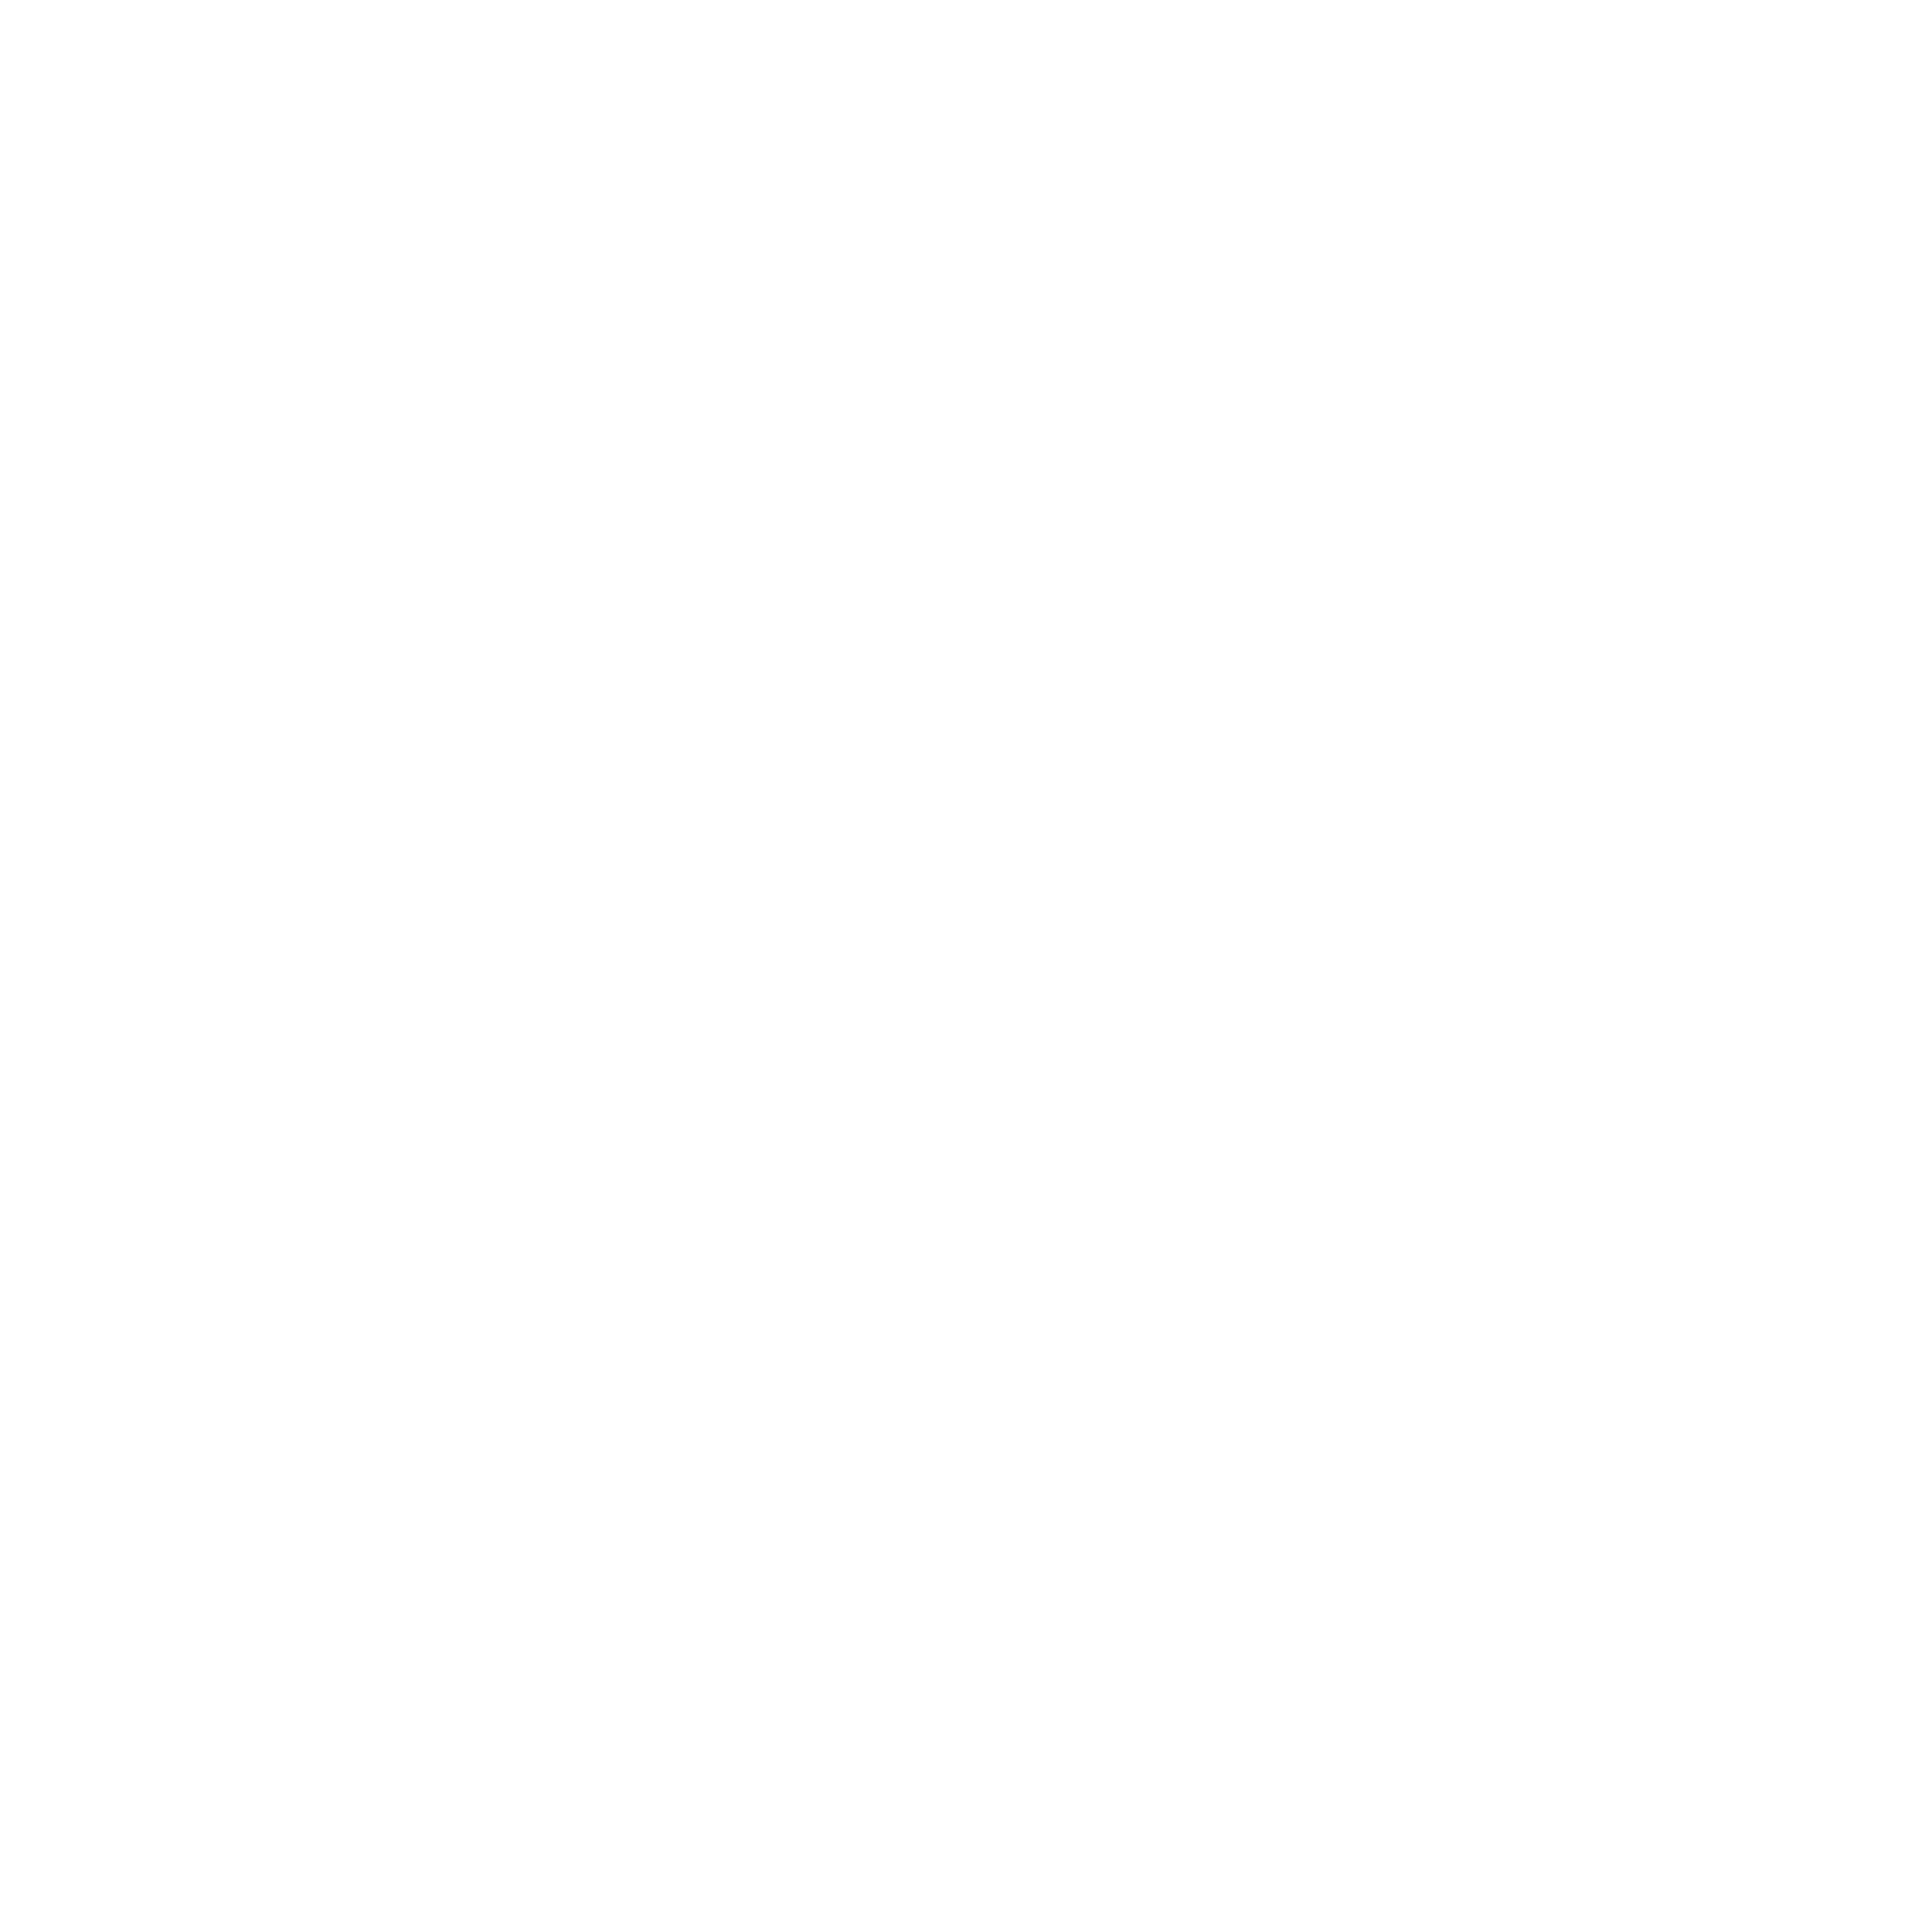 Byker Primary